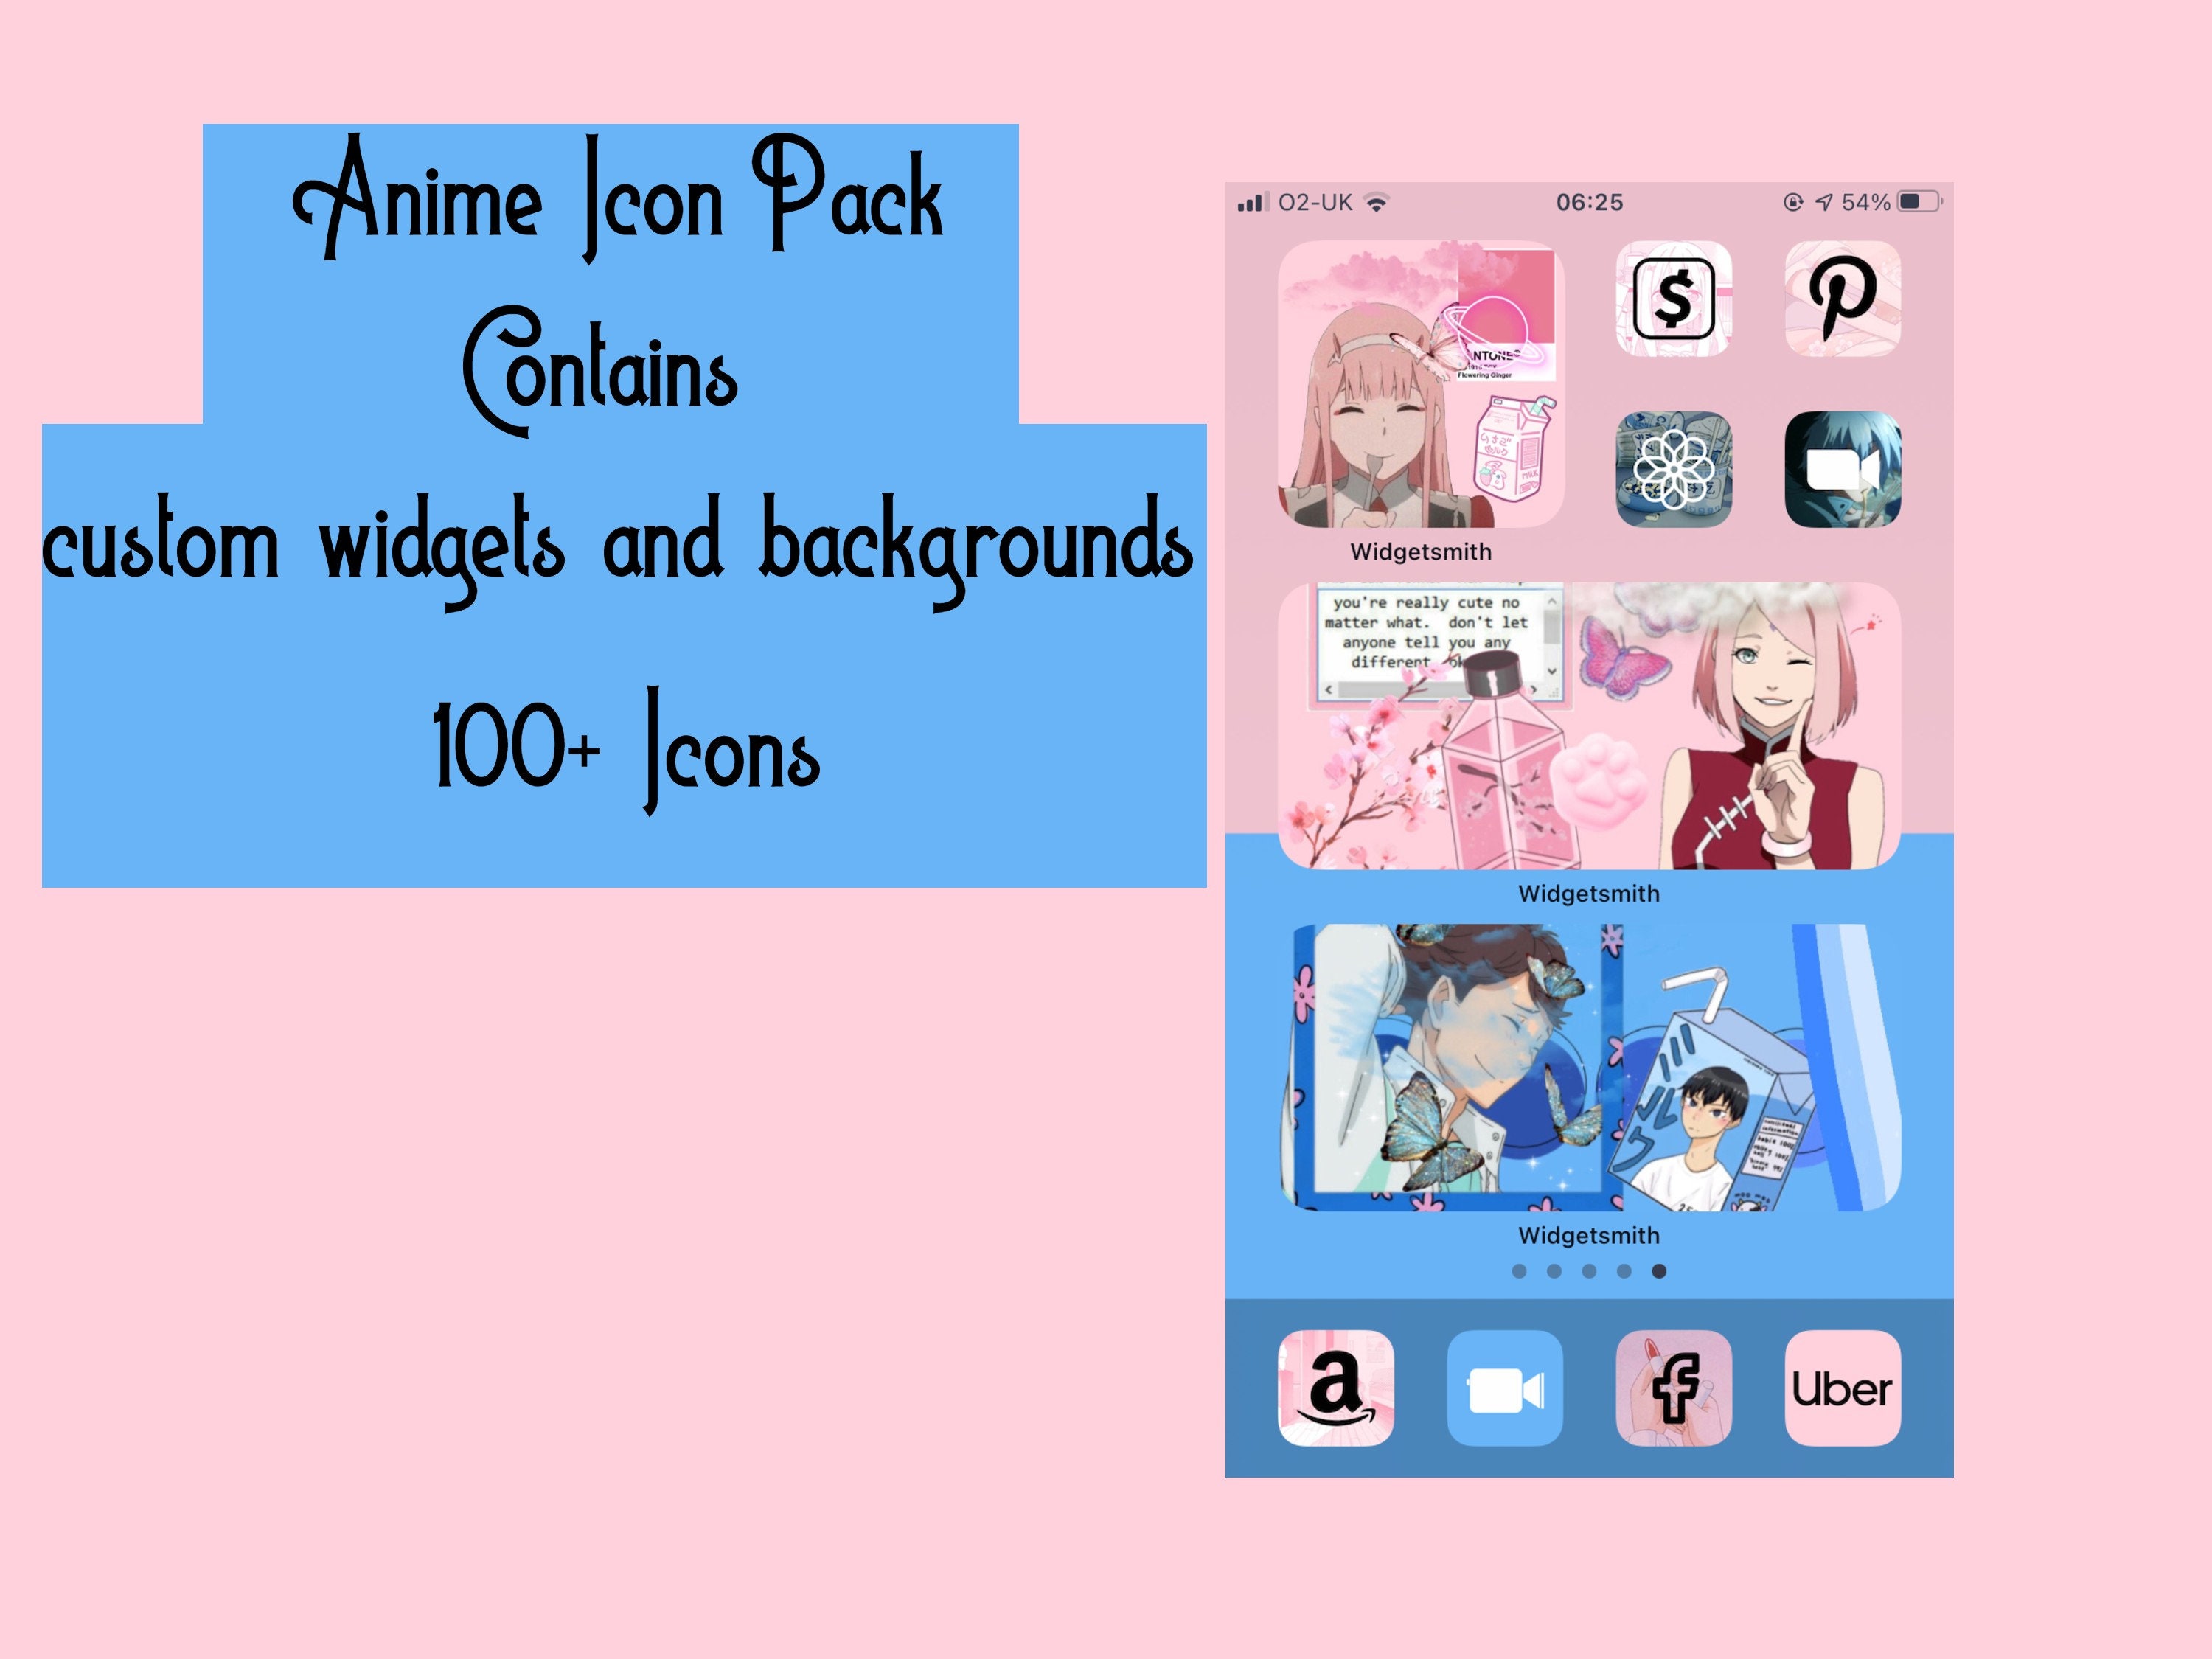 Anime ♥️ Parnk 18+ - Koded Apps - Kodular Community